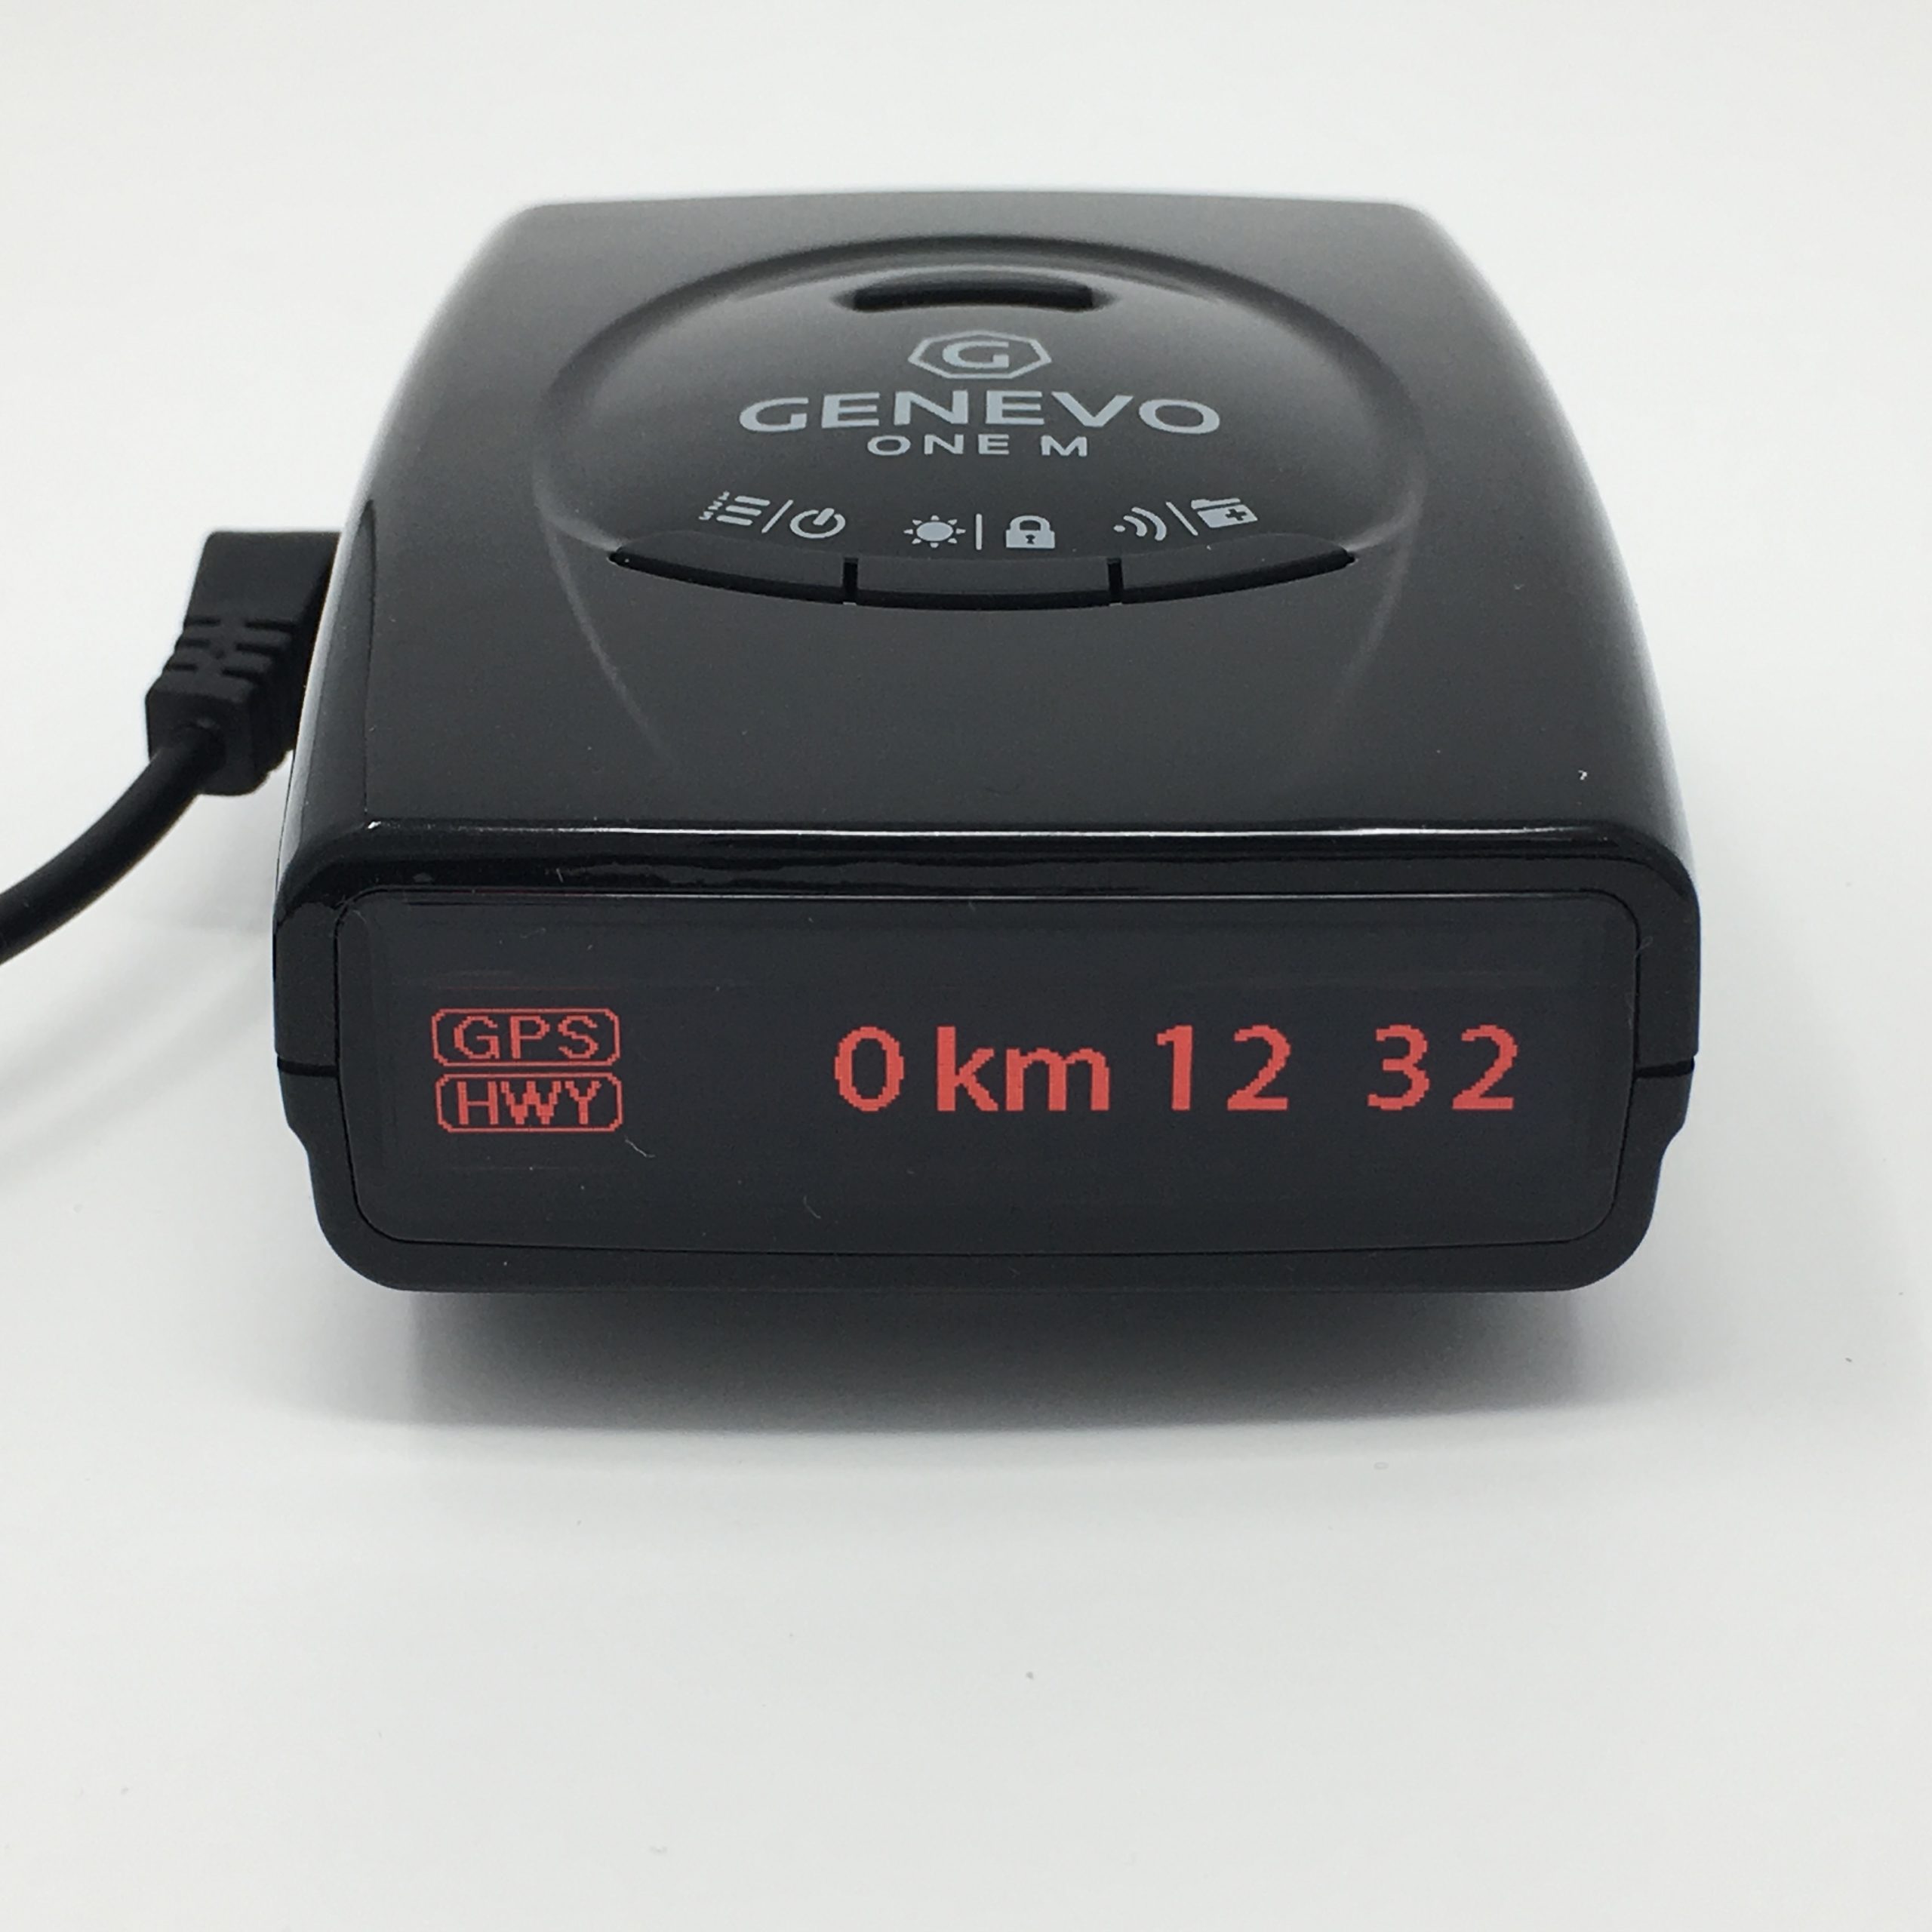 Genevo GPS Plus Radarwarner - Genevo POI Radarwarner